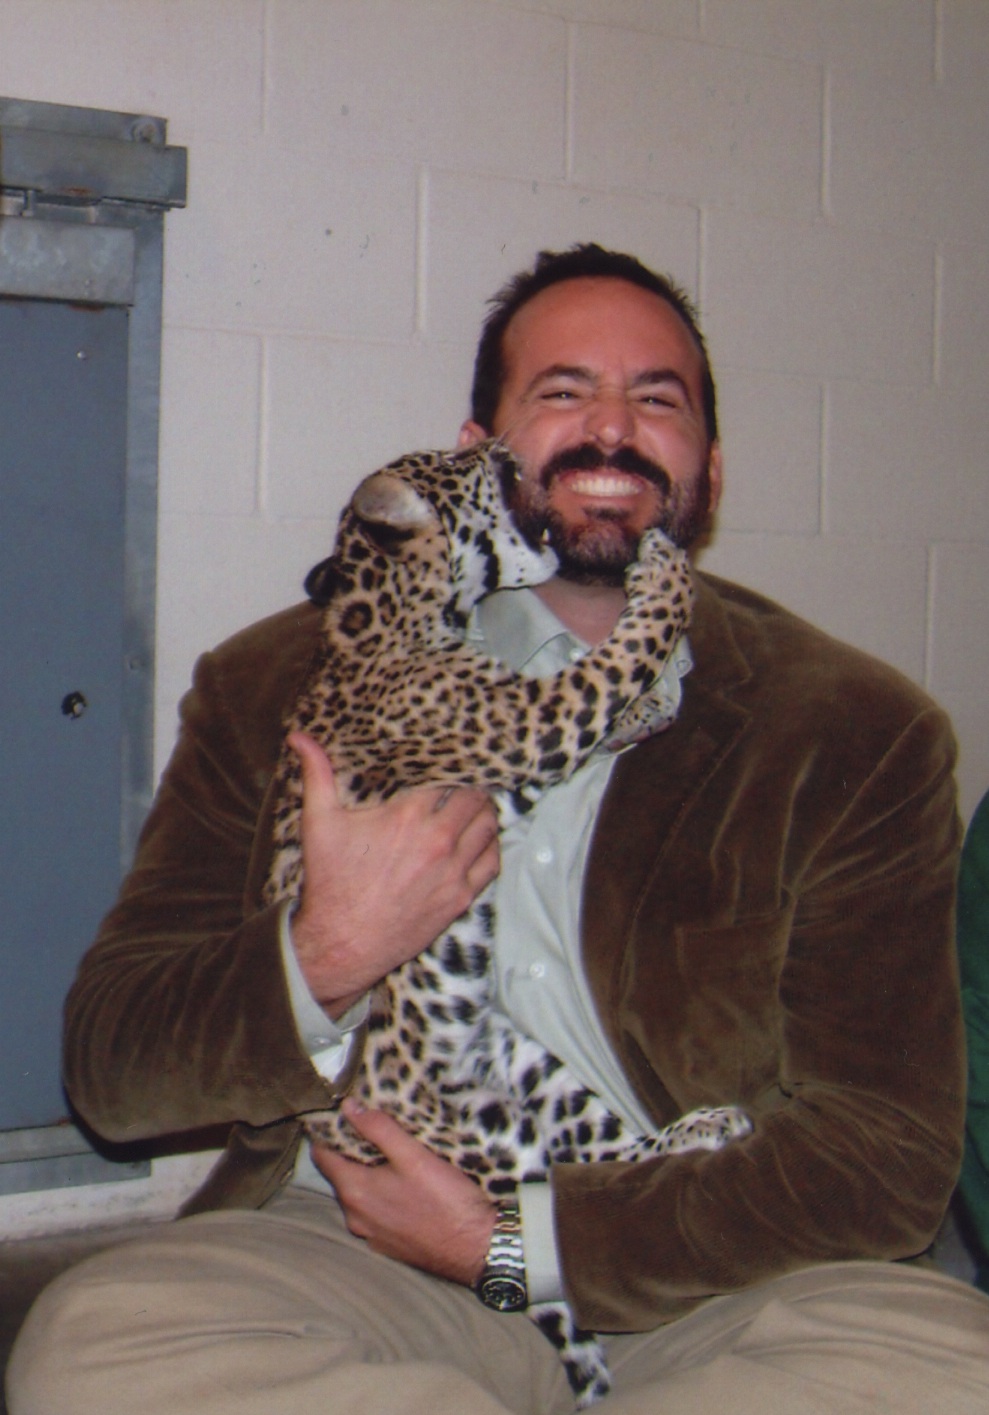 Greive posing with a jaguar cub